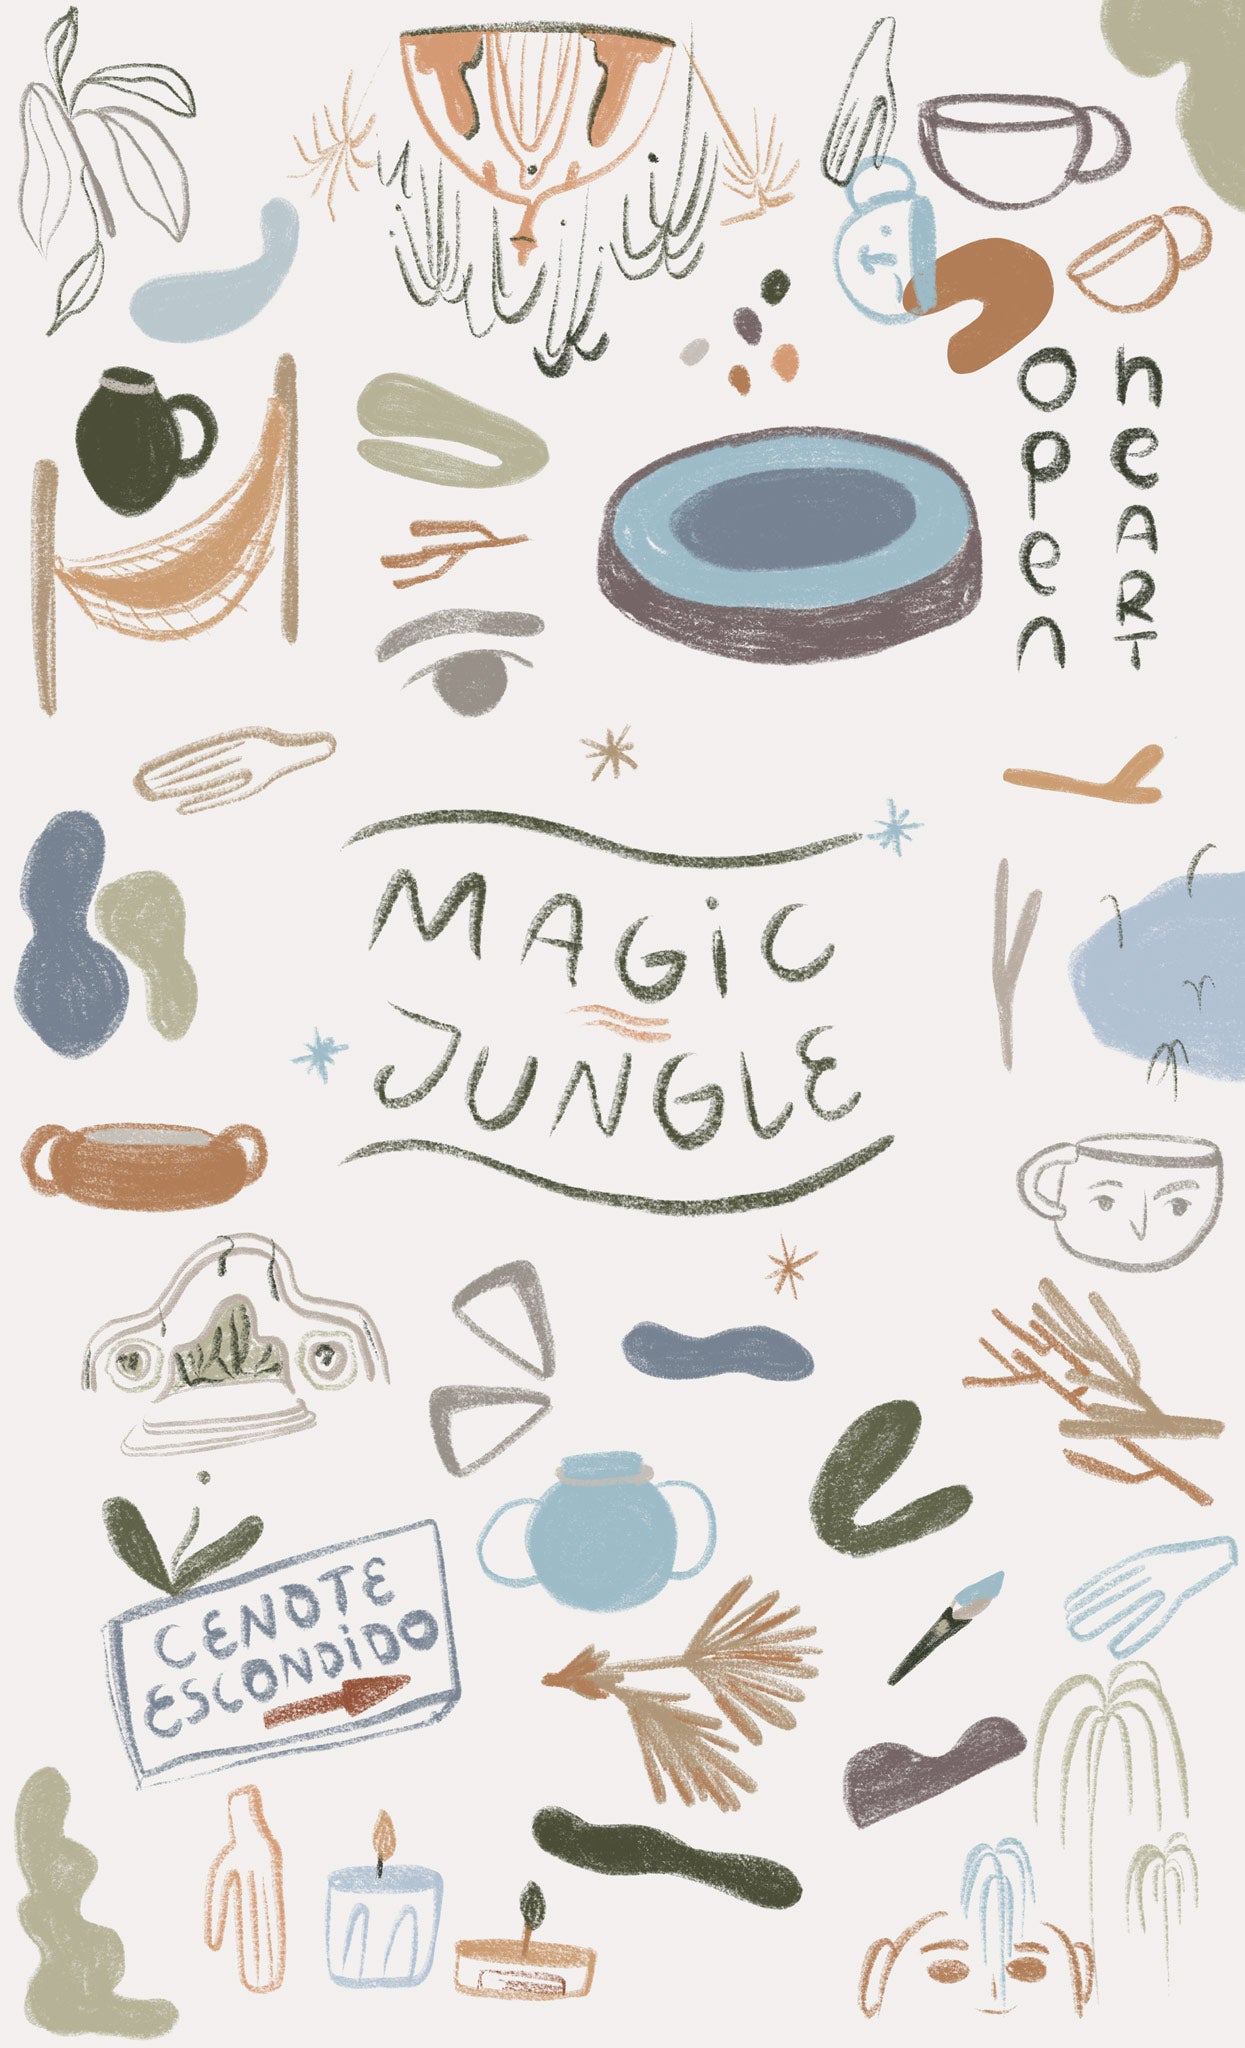 Magic Jungle